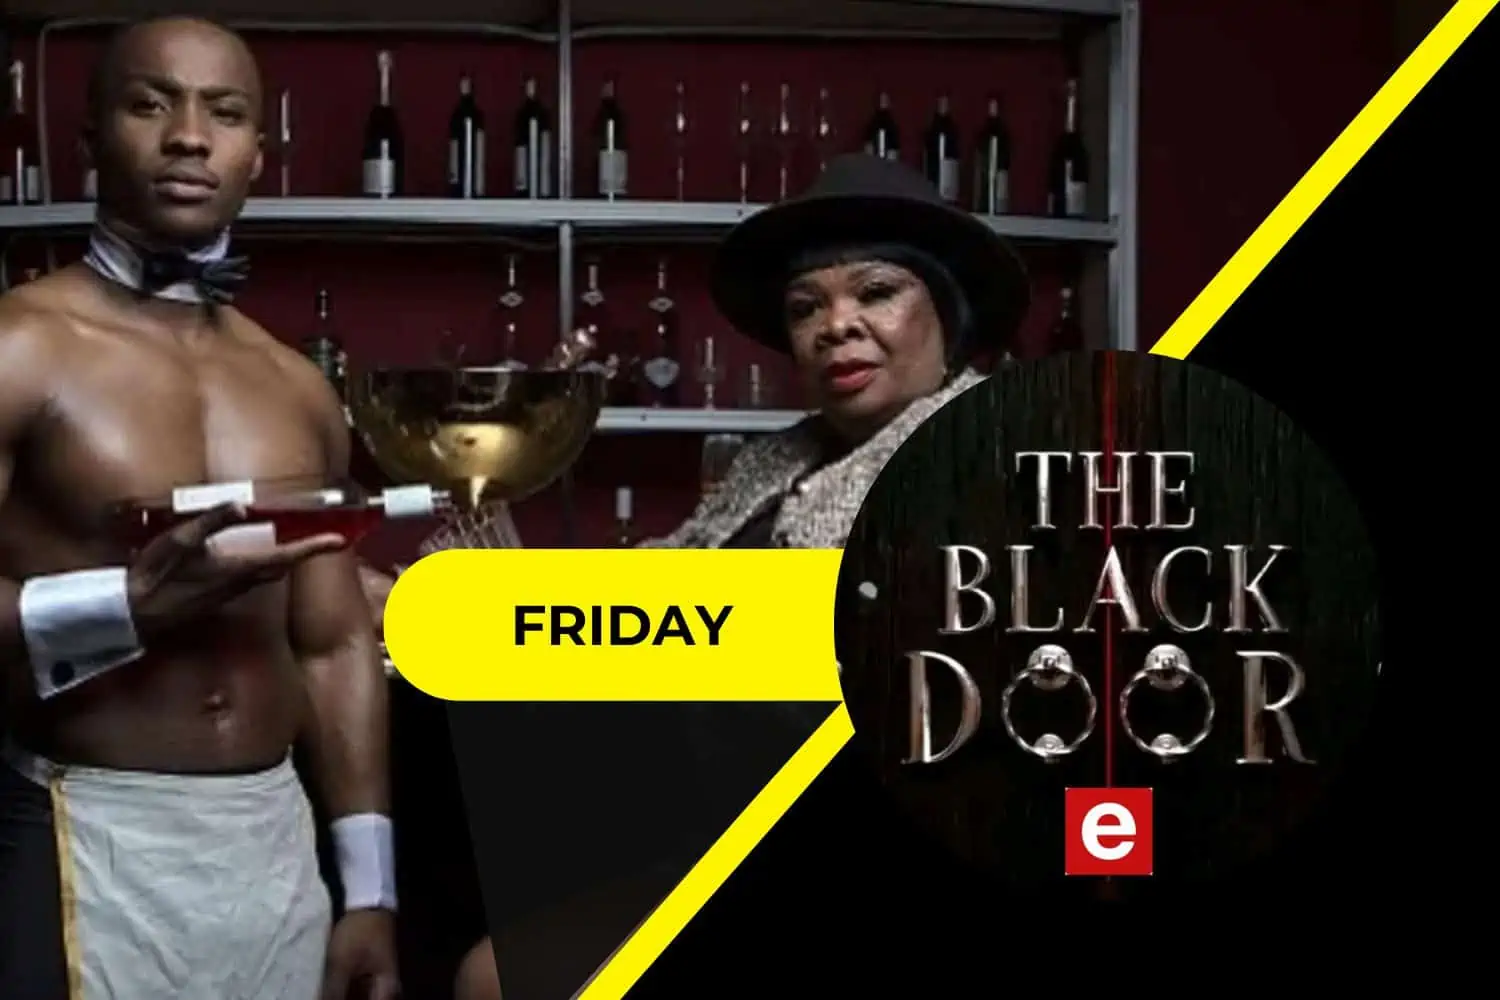 On today's episode of The Black Door Friday